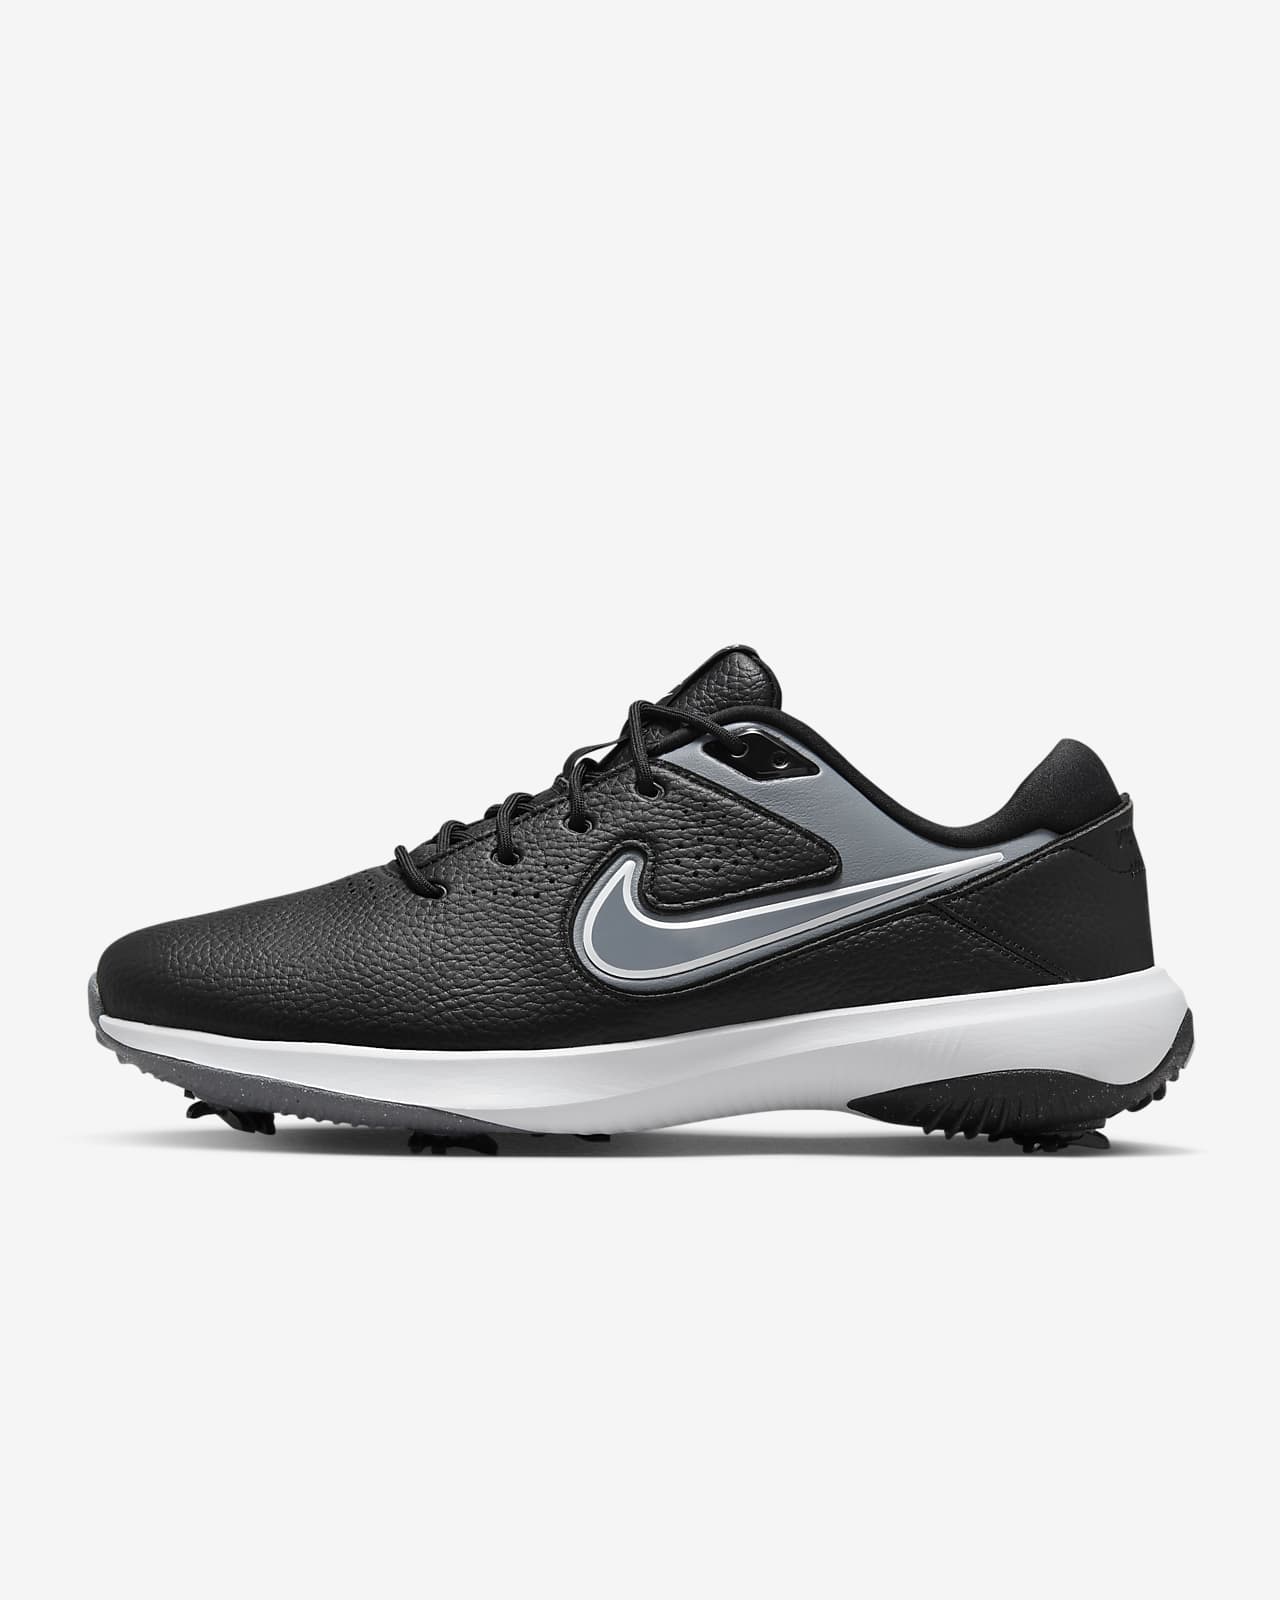 Nike Golf Shoes Men - Victory Pro 3